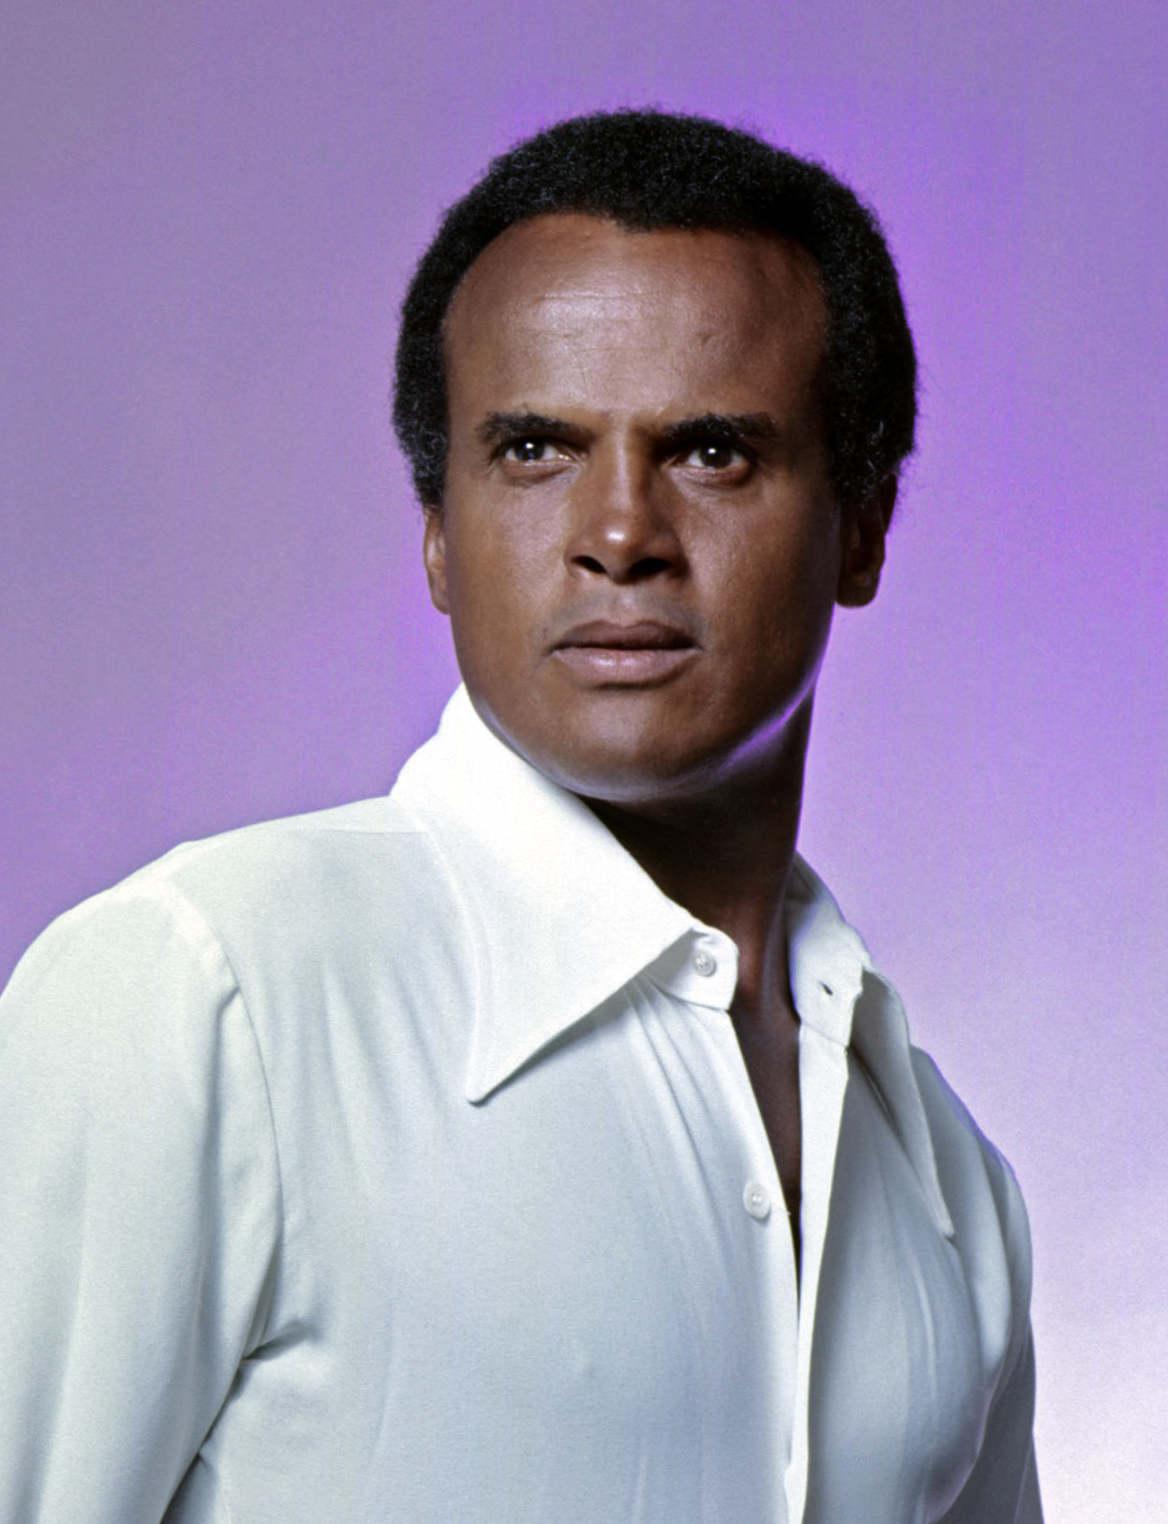 Singer Harry Belafonte, ikonisches Porträt, Farbe 17 x 22 Zoll